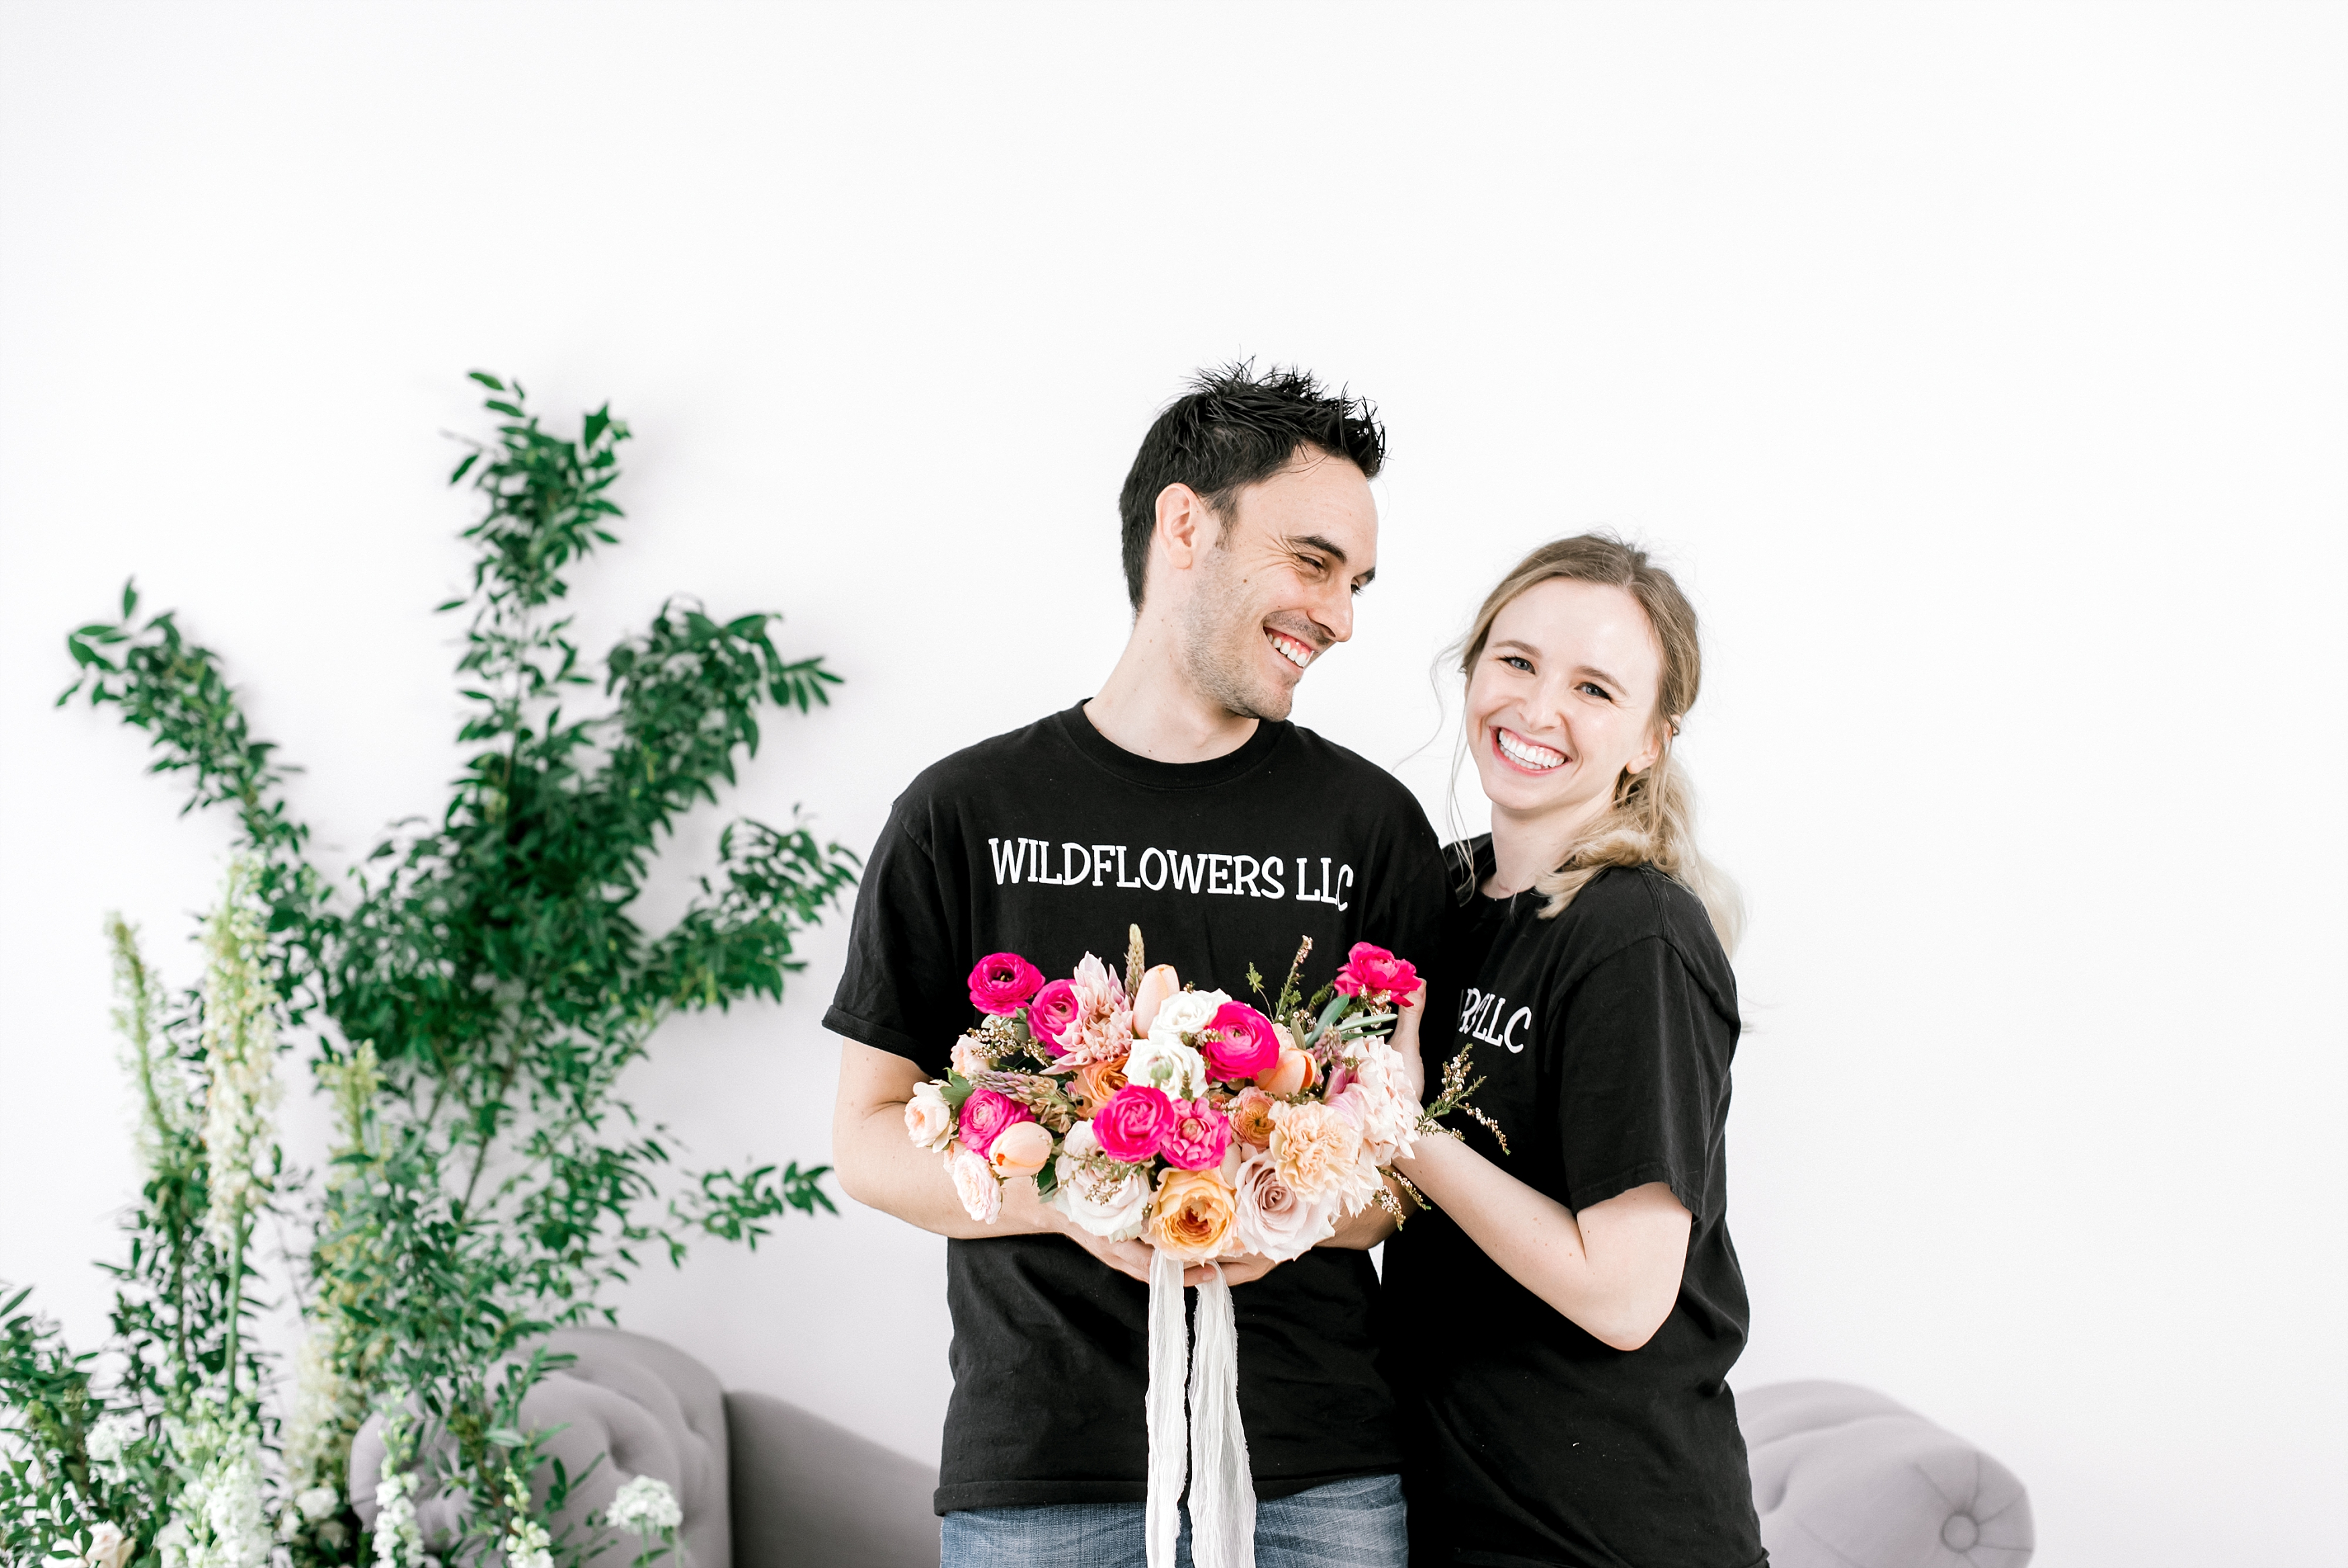 Wildflowers LLC wedding florist creative business branding shoot 